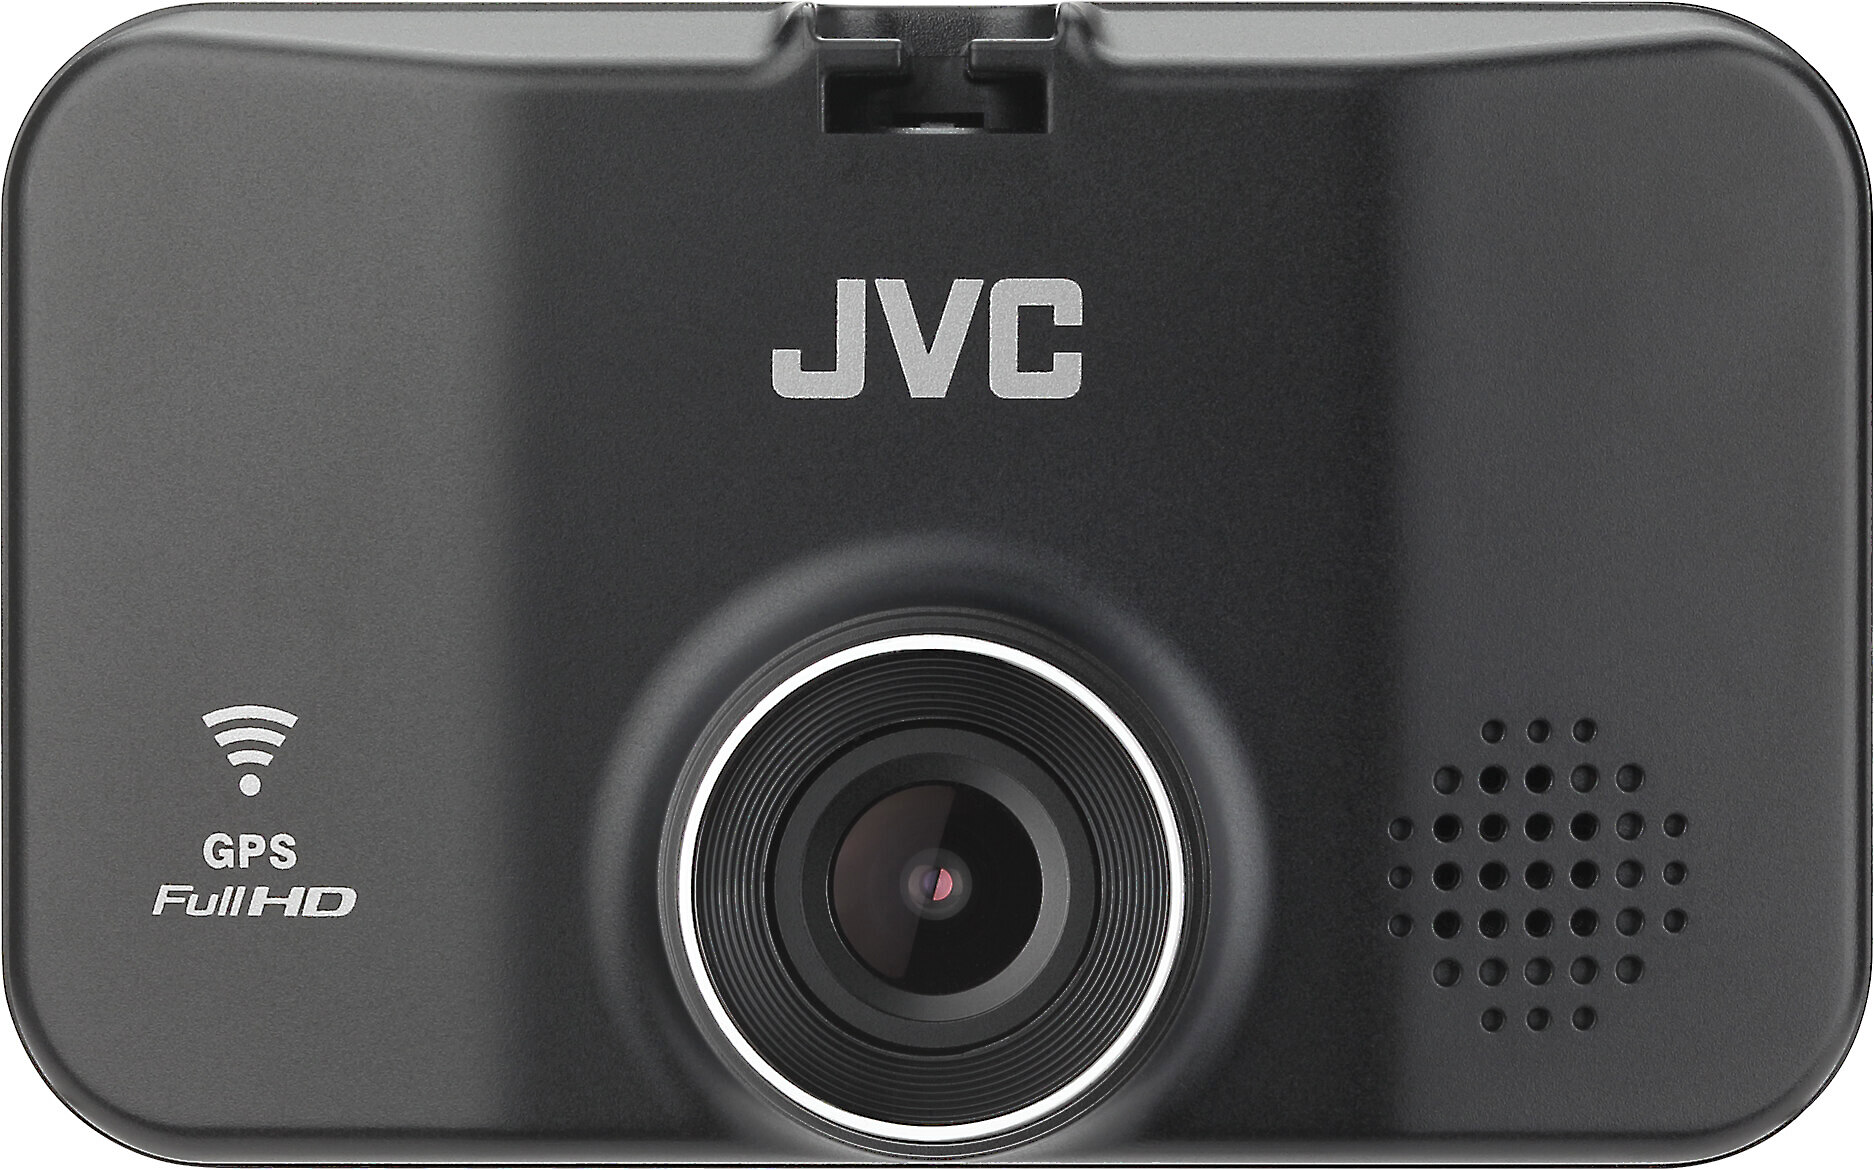 Garmin babyCam™ In-vehicle video camera for use with Garmin portable  navigators at Crutchfield